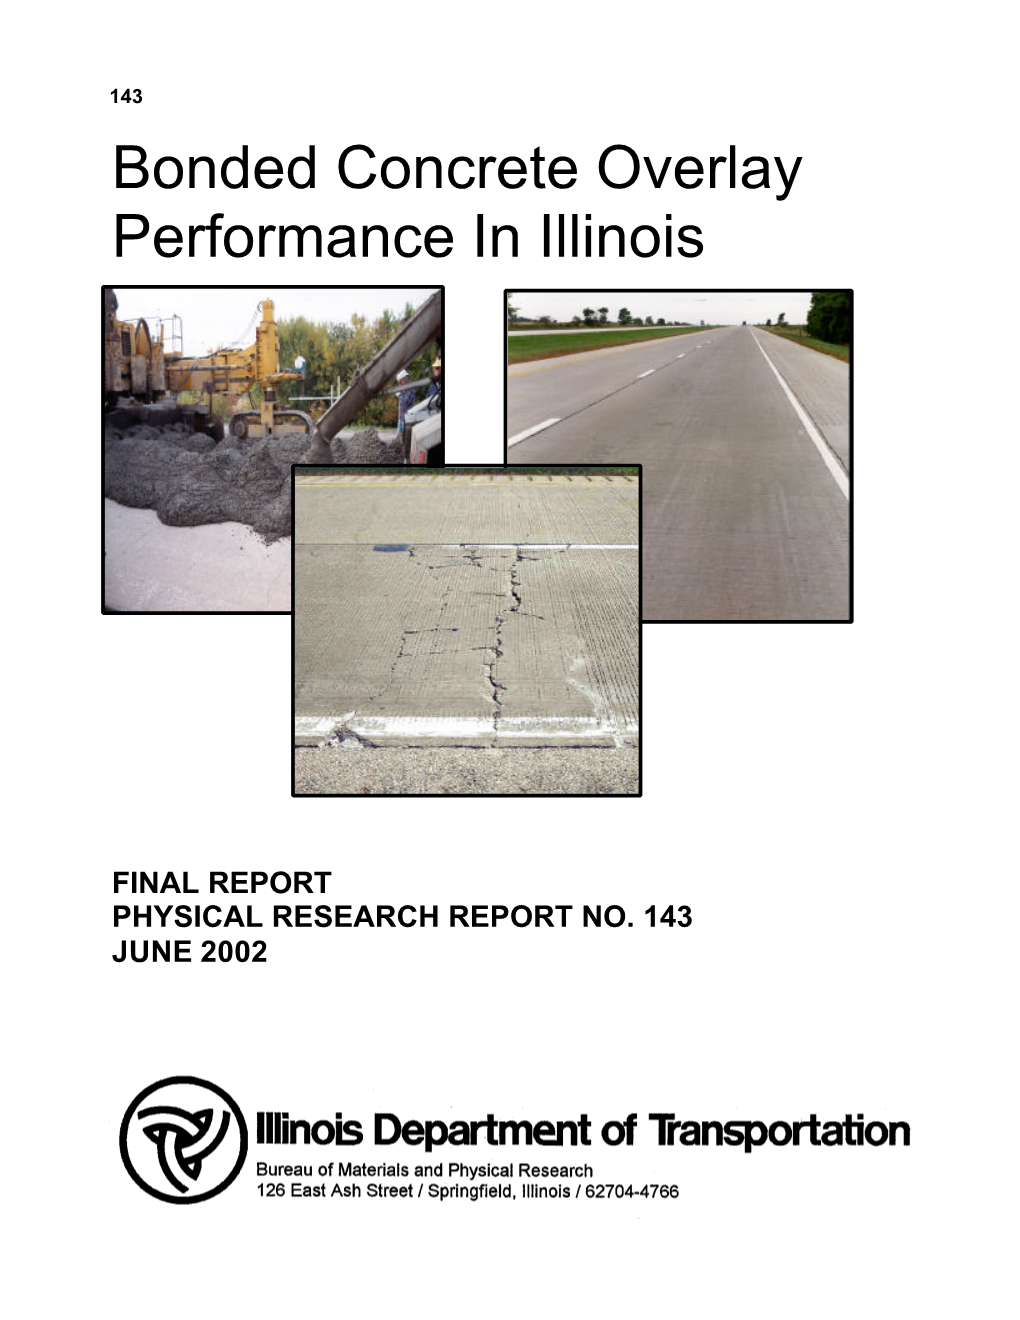 Bonded Concrete Overlay Performance in Illinois